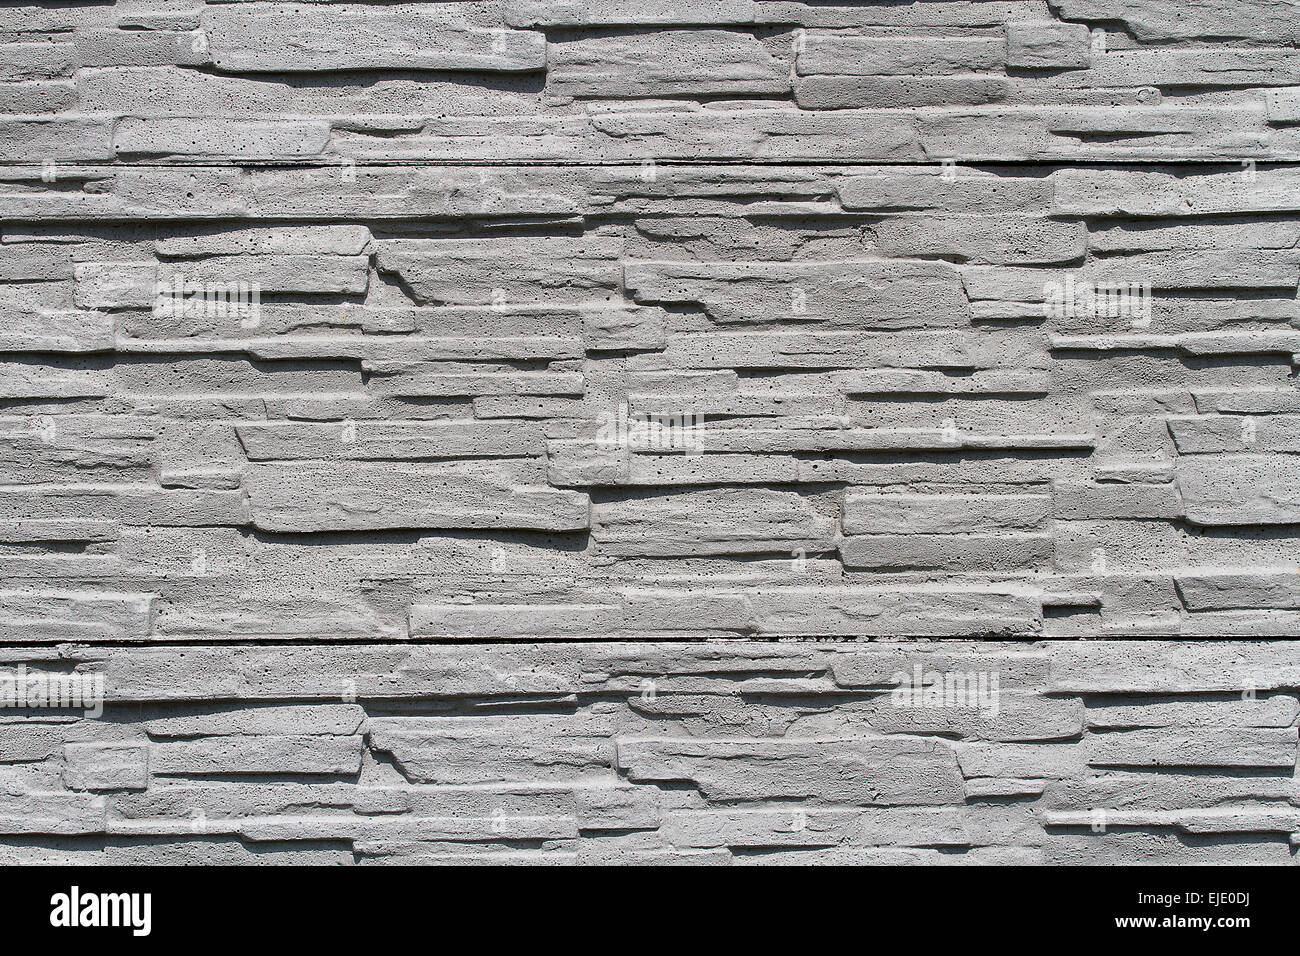 Textured gray stone wall pattern. Background image Stock Photo